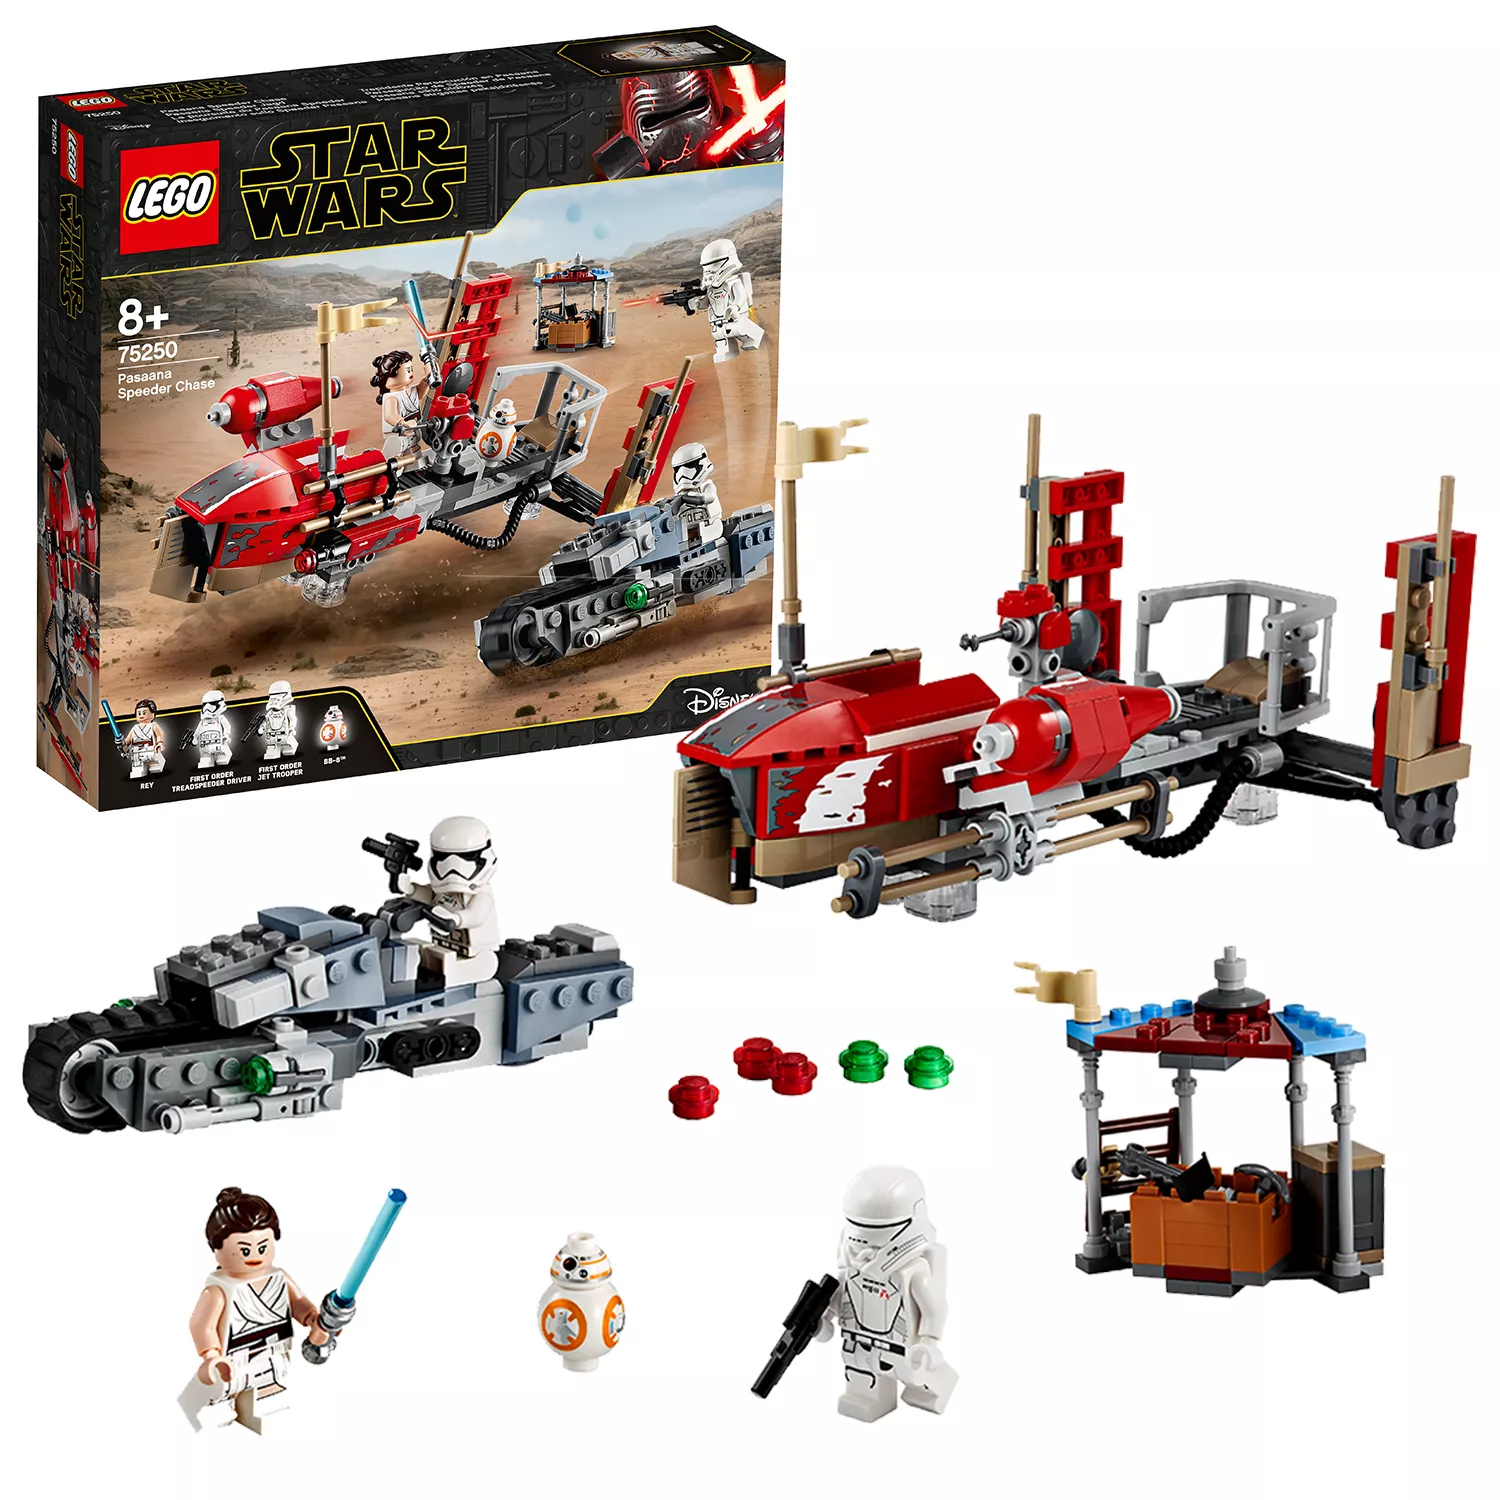 LEGO Star Wars Pasaana Speeder Jagd - 75250